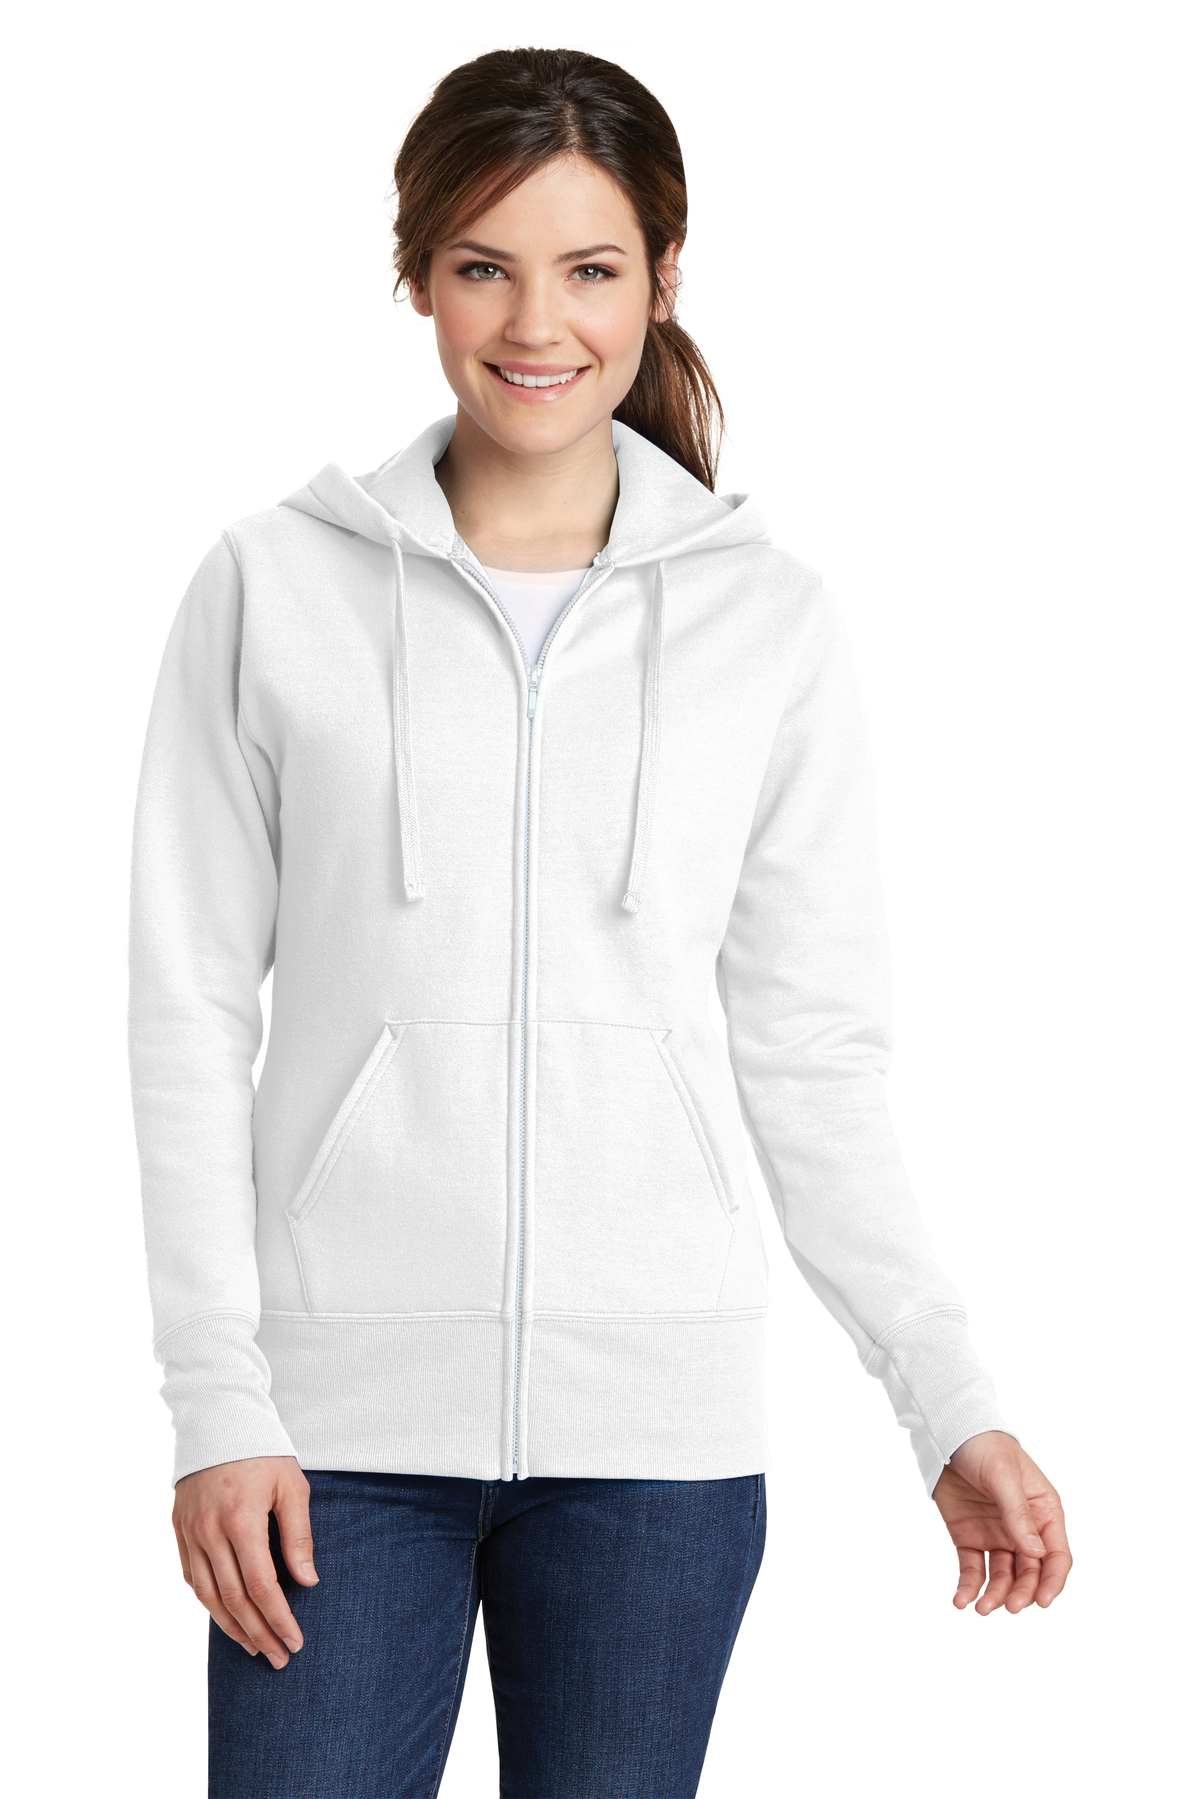 Port & Company Embroidered Women's Core Fleece Full-Zip Hooded